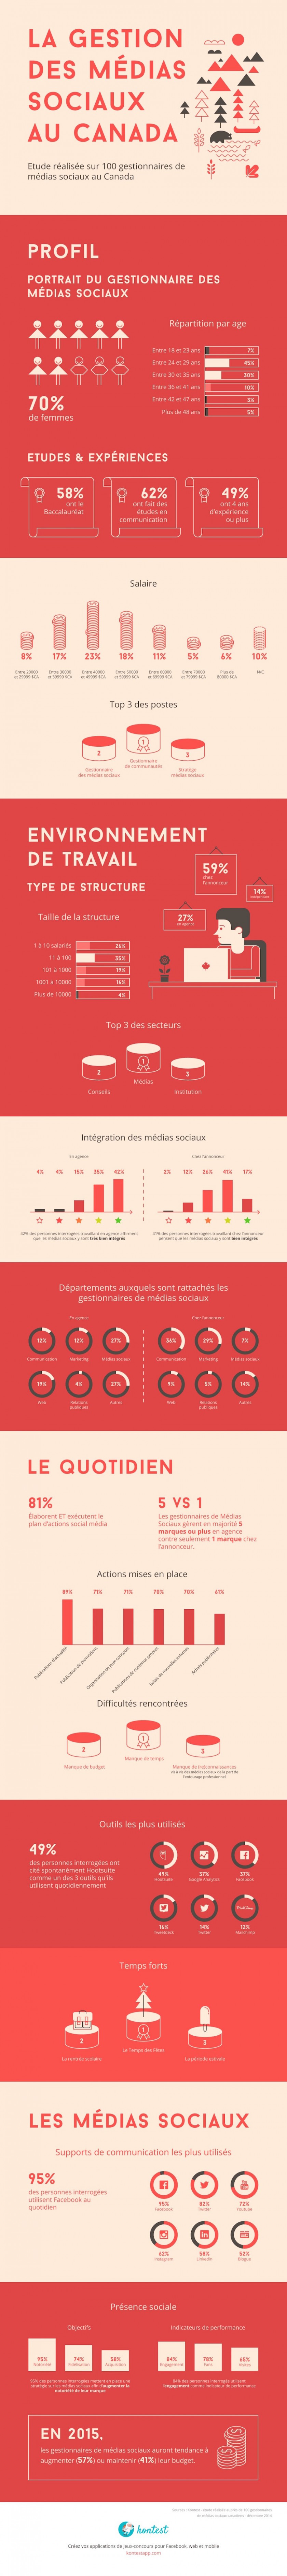 Infographie Kontest Etude Gestionnaires Communautes Quebec Janvier 2015